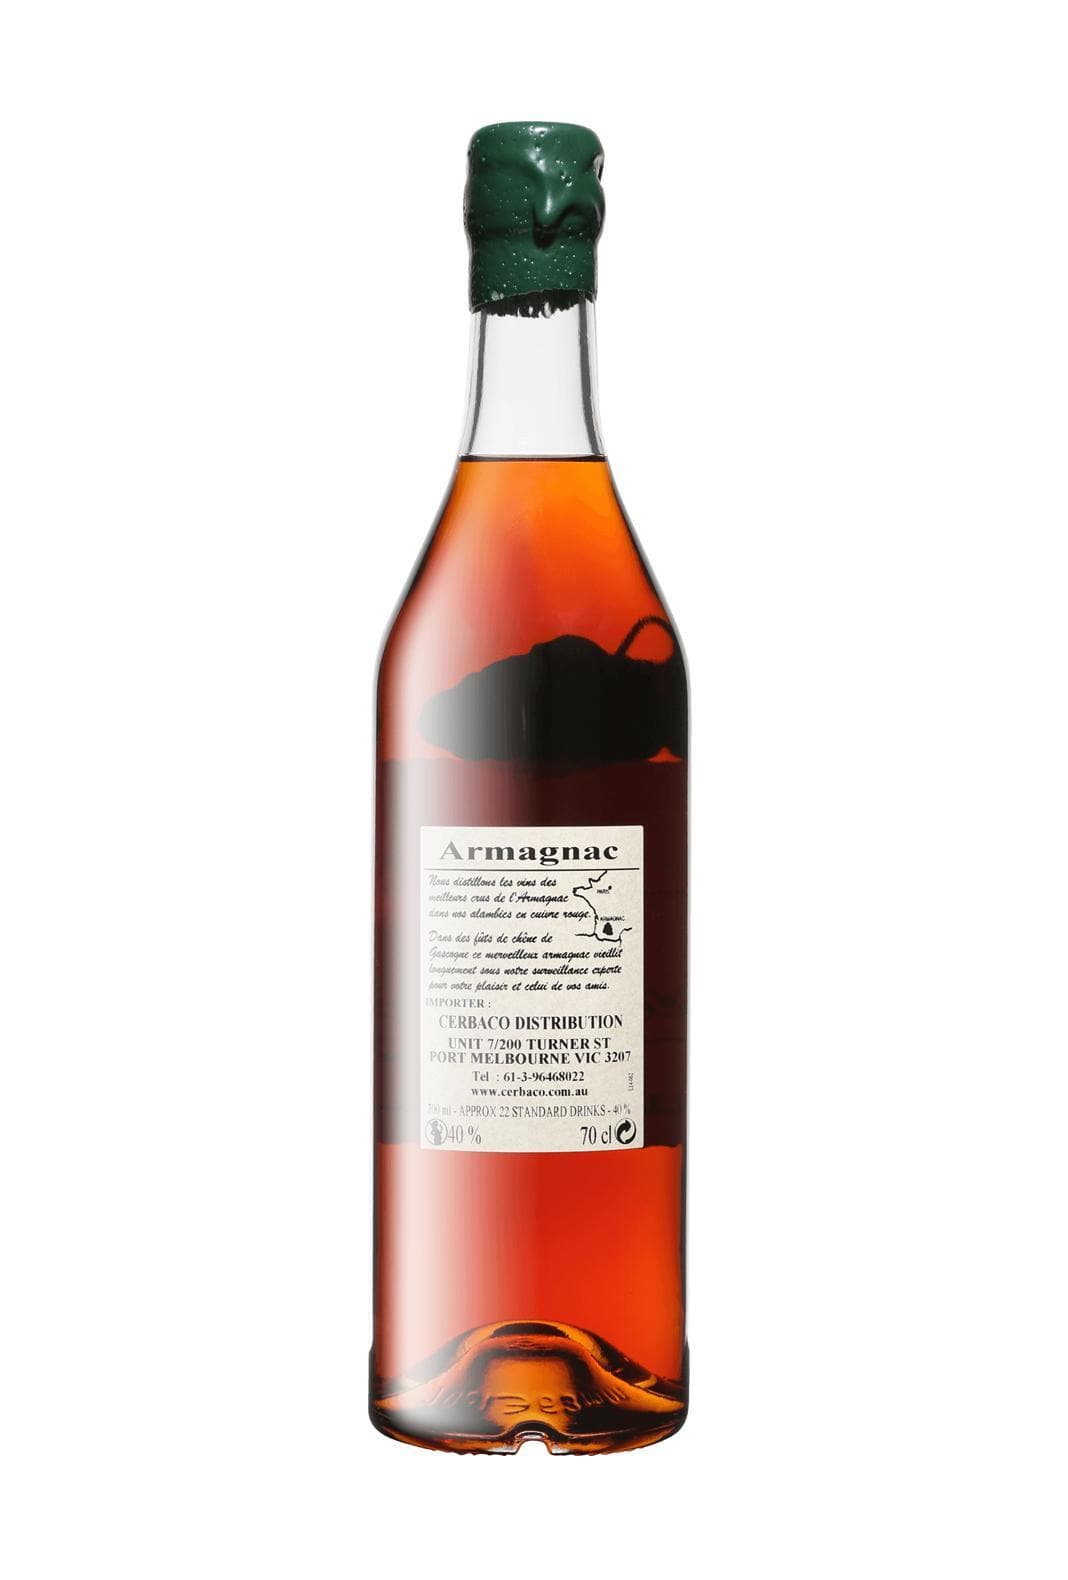 Comte de Lamaestre Bas Armagnac 1990 40% 700ml | Brandy | Shop online at Spirits of France